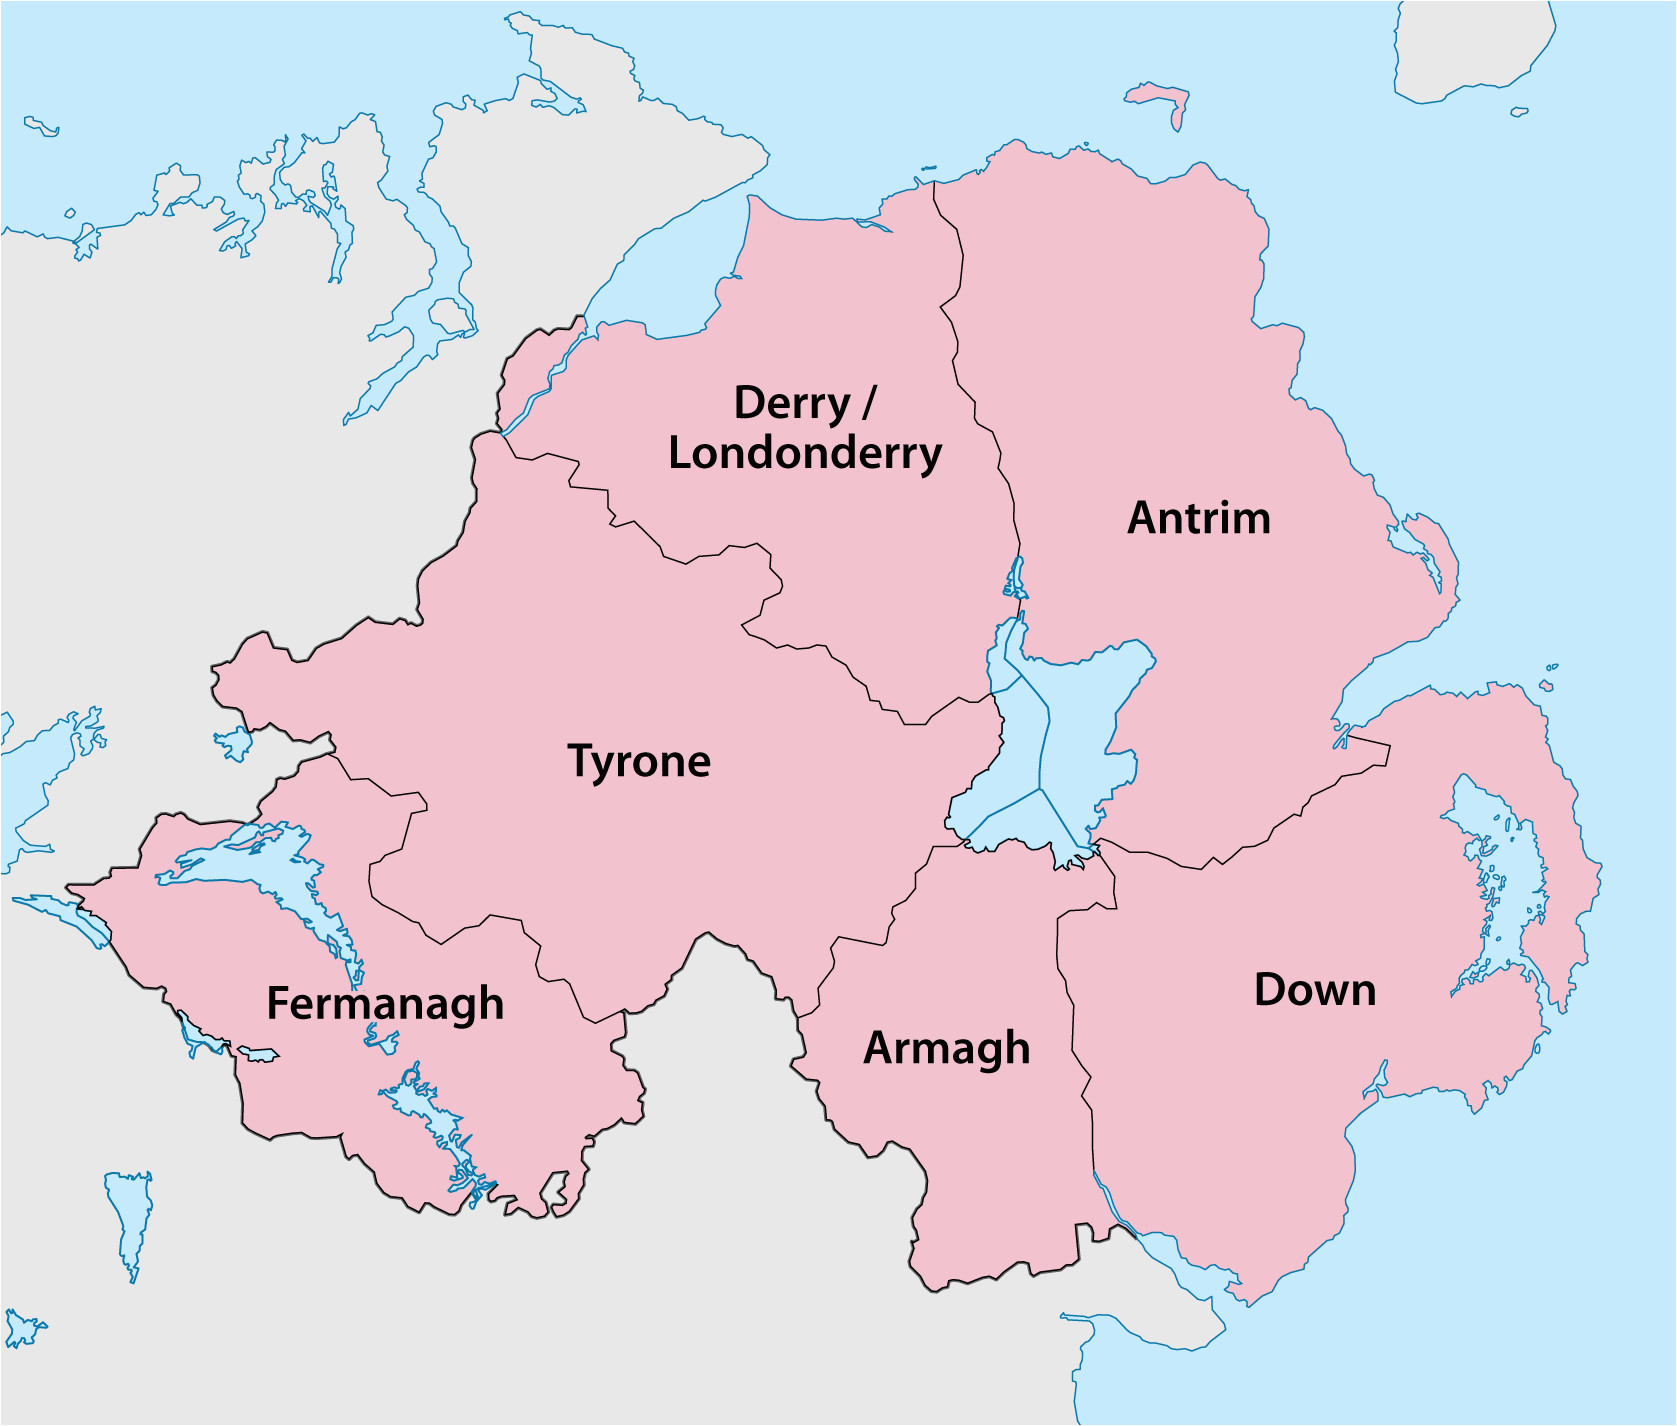 Northern Ireland Map Counties Counties Of northern Ireland Wikipedia